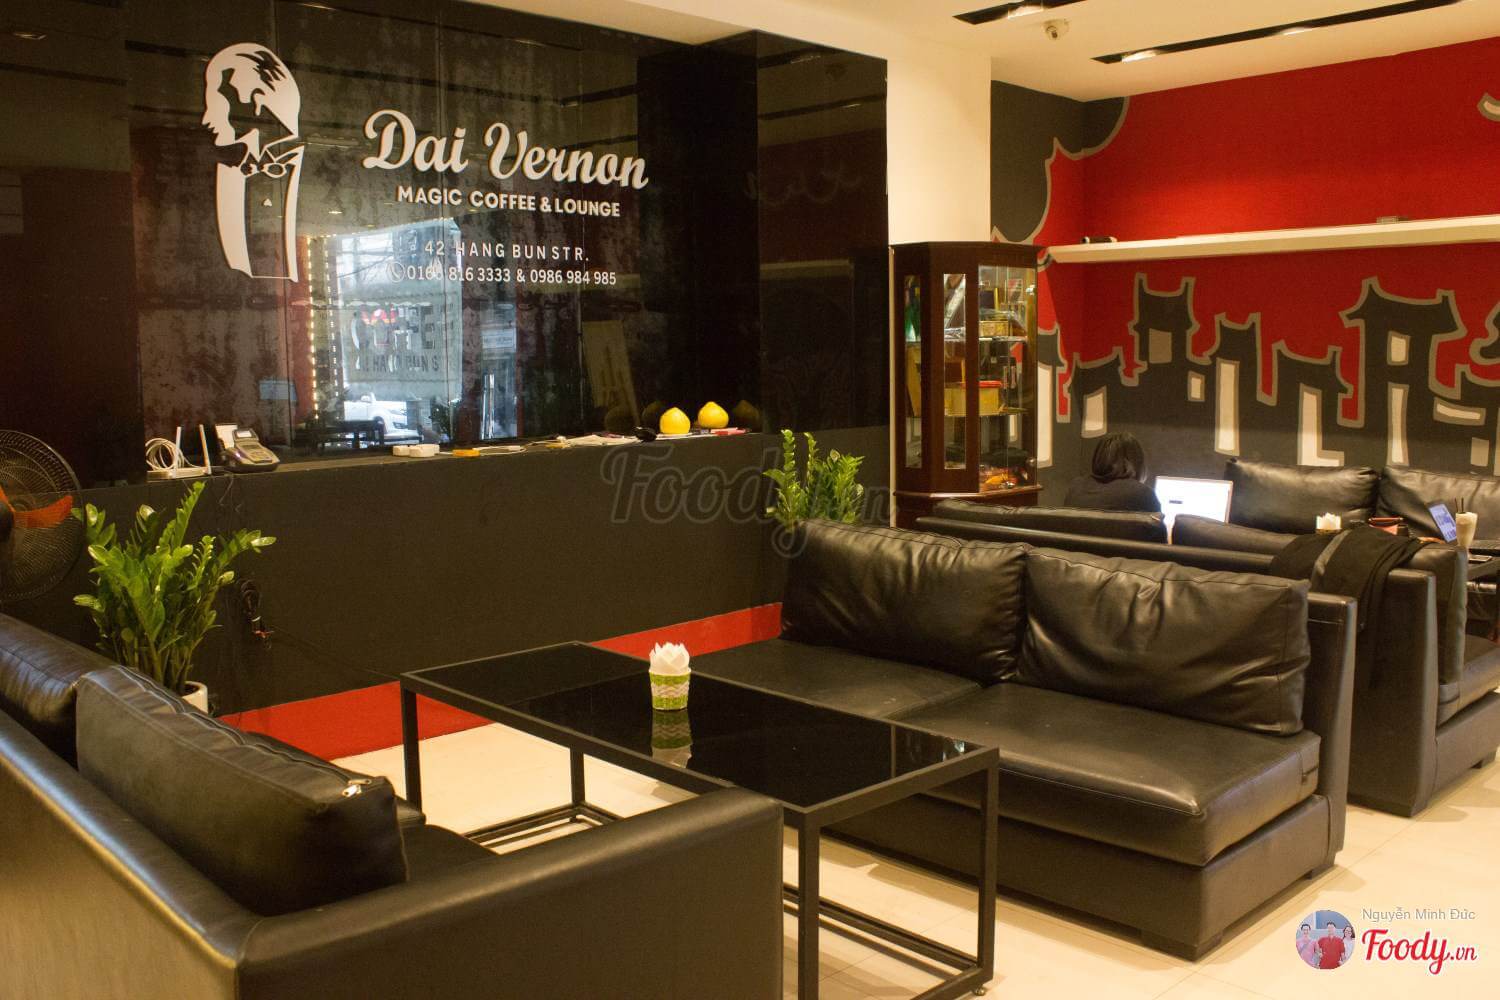 Dye Vernon Coffee & Lounge